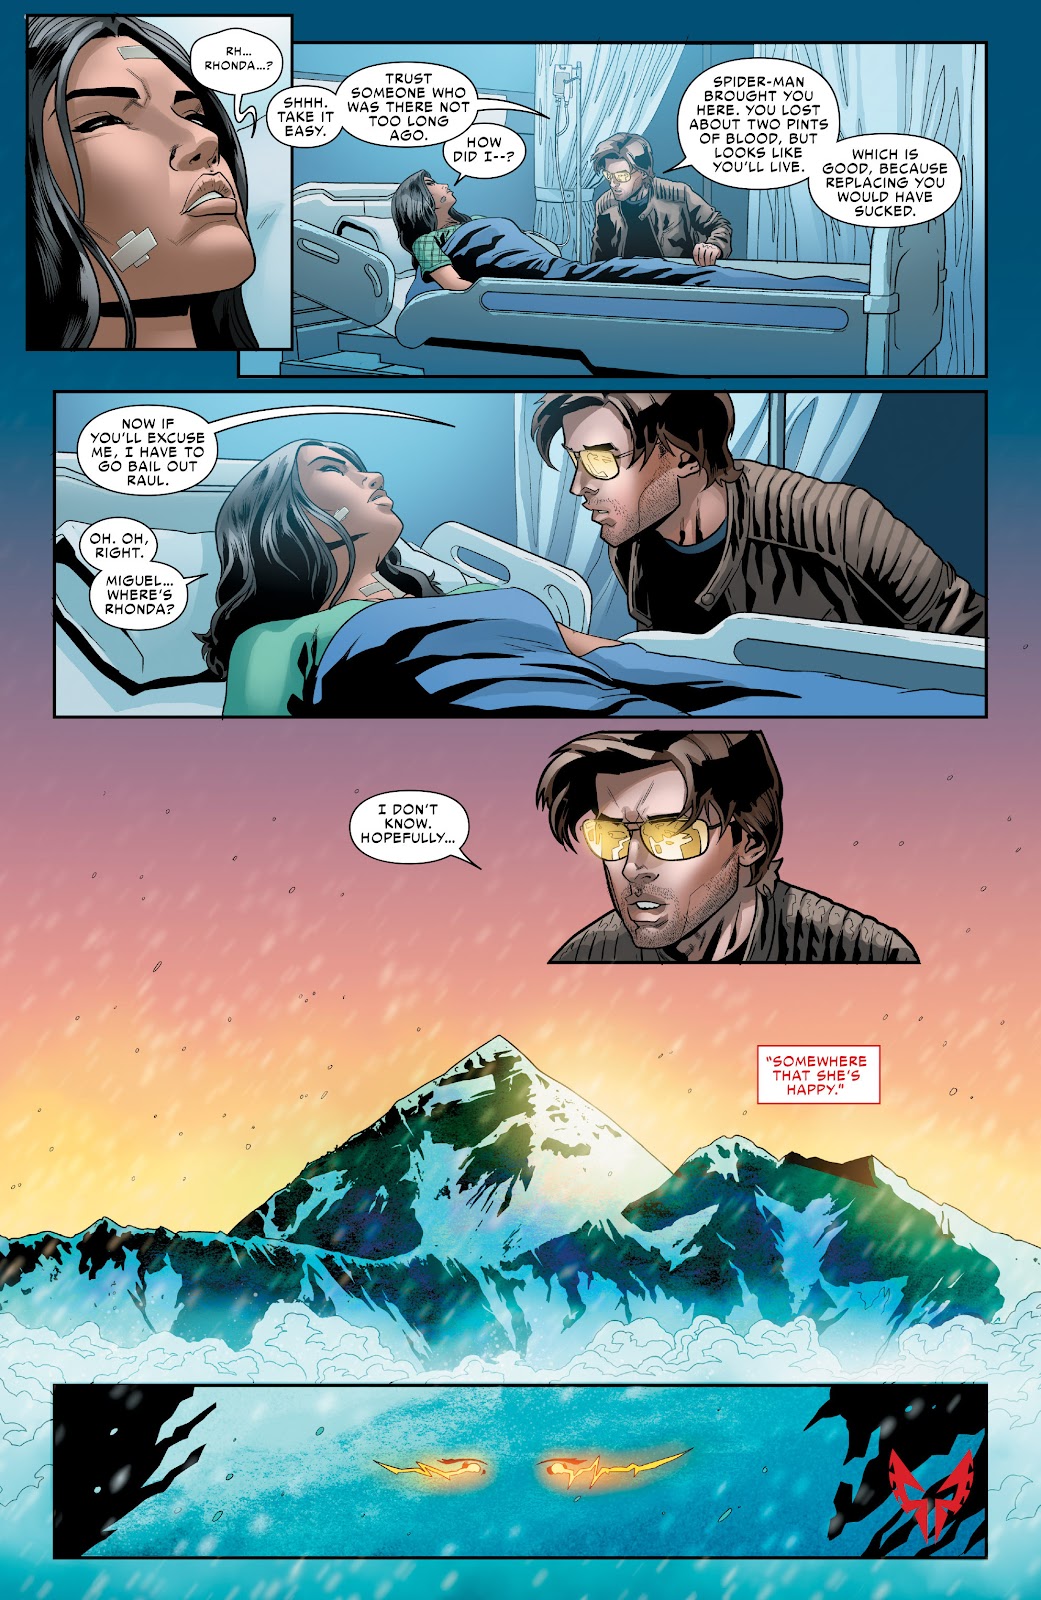 Spider-Man 2099 (2015) issue 7 - Page 22